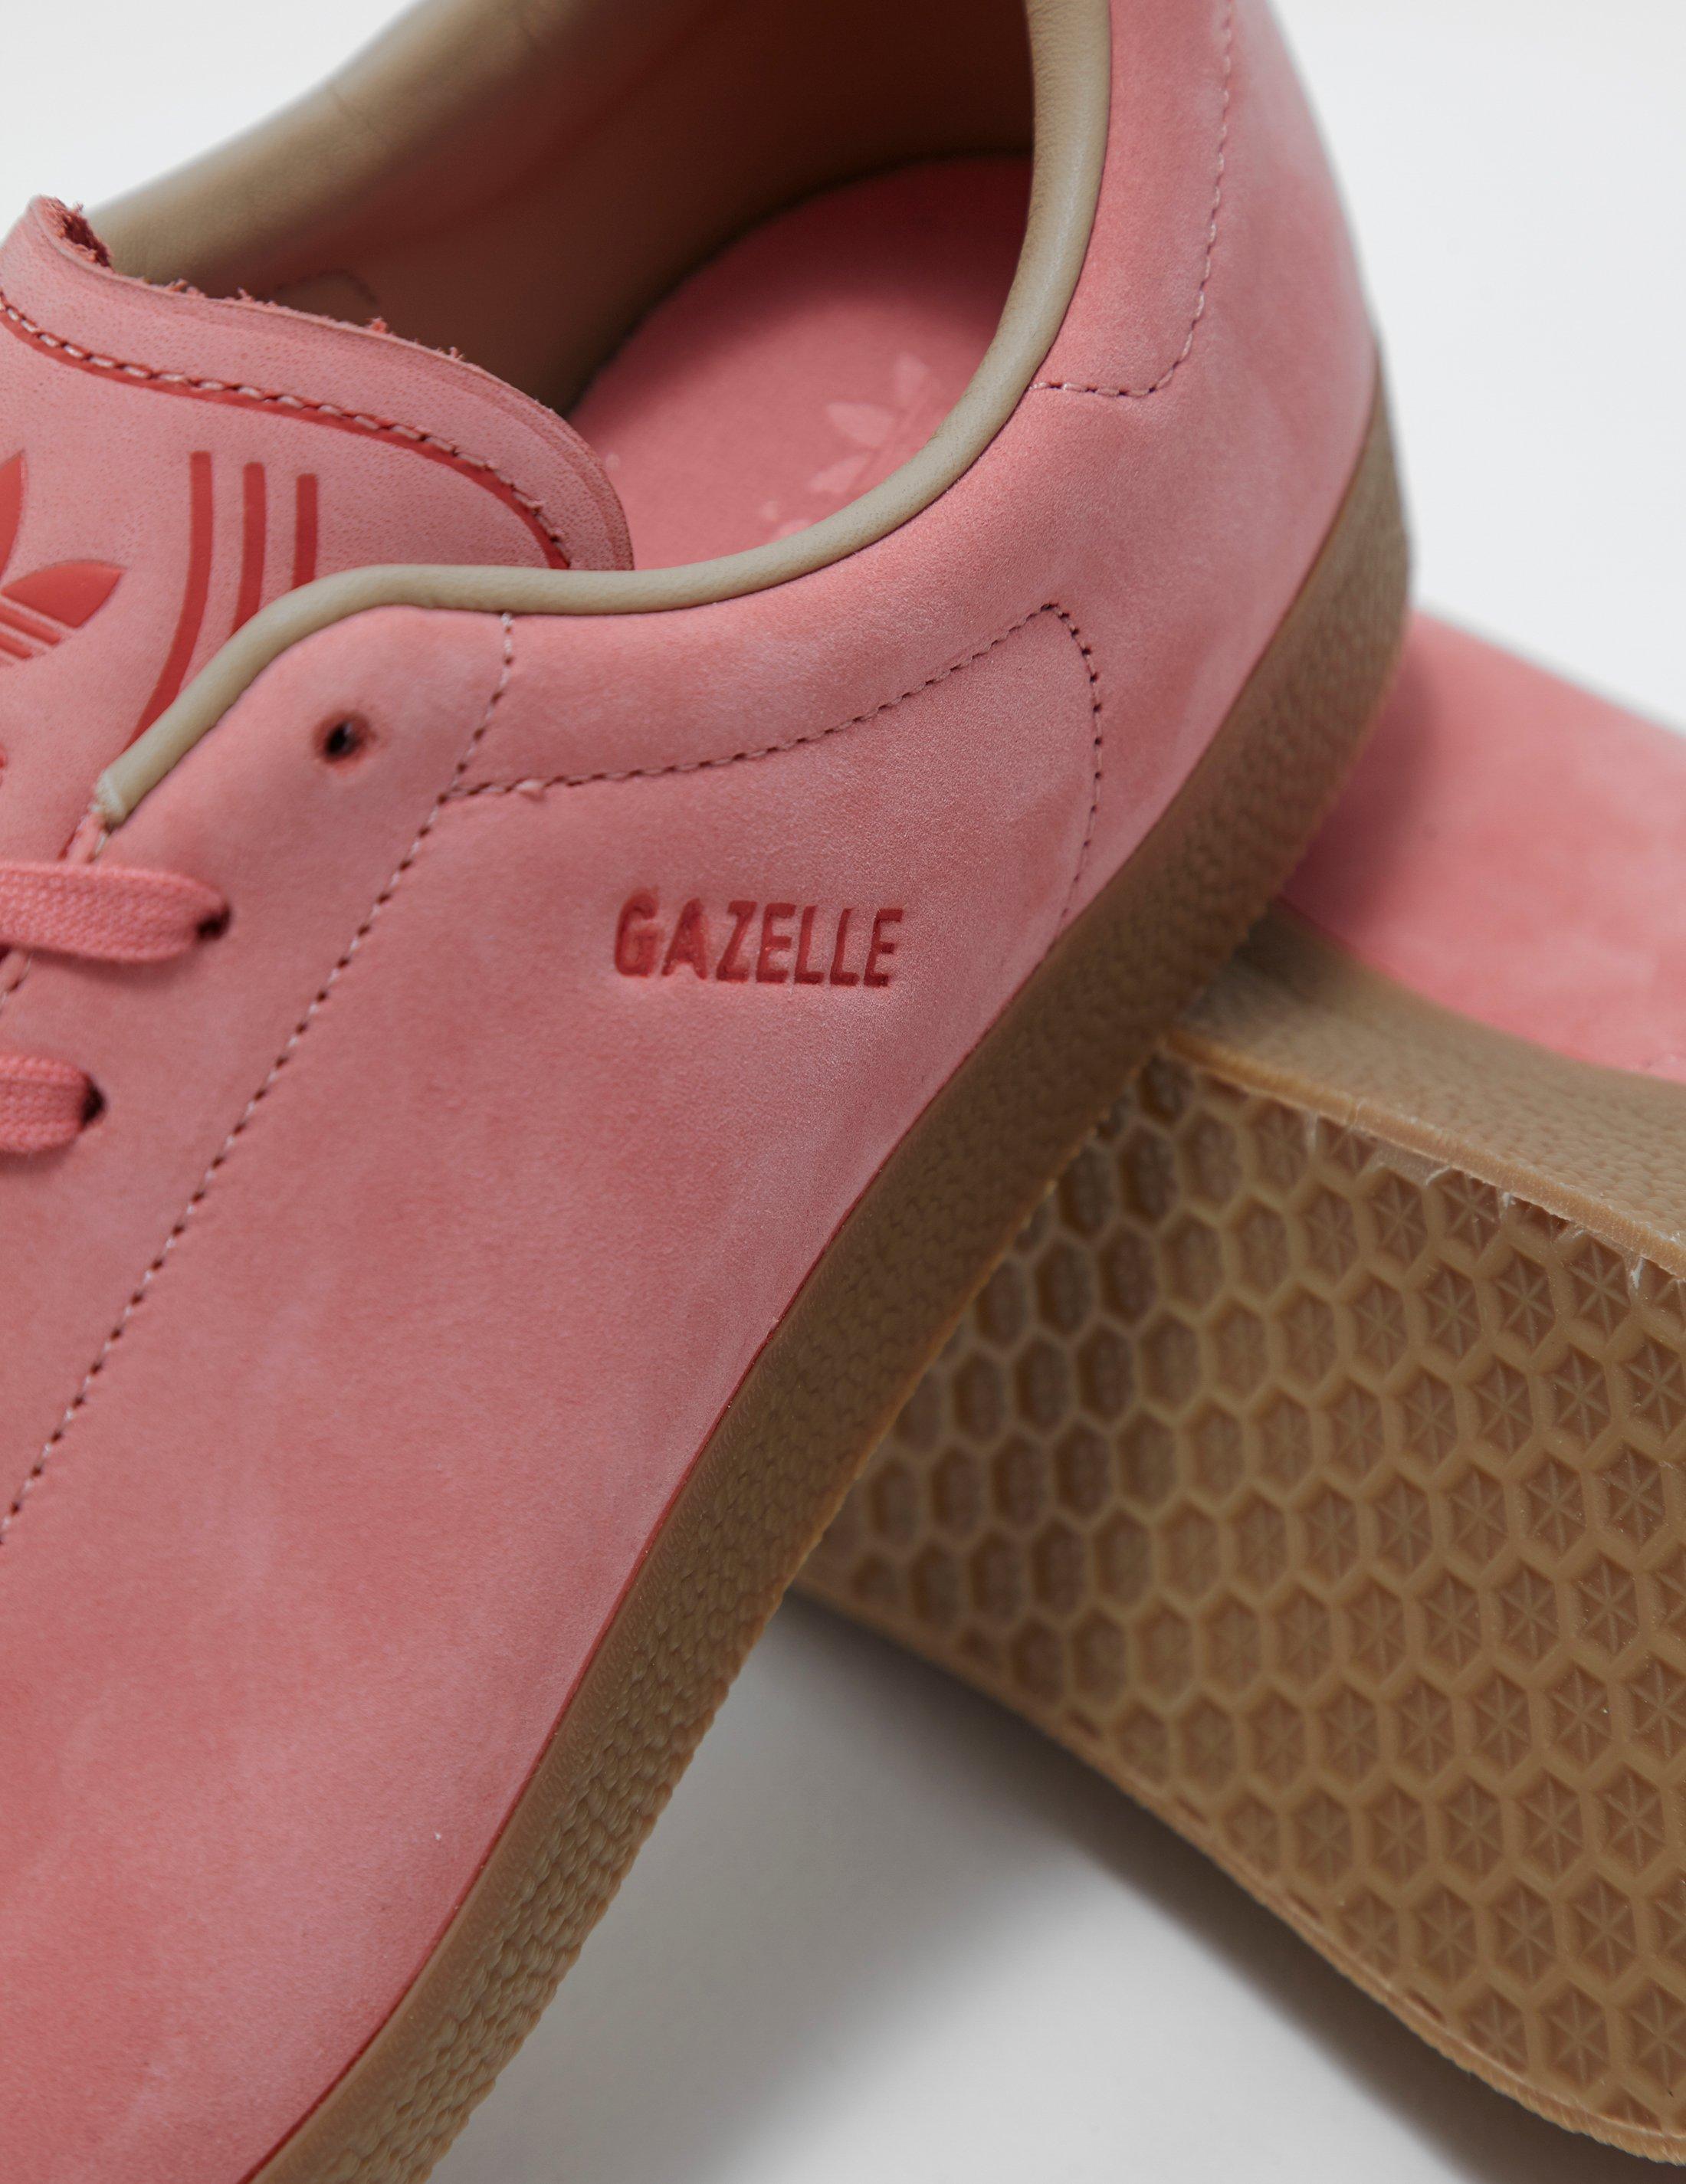 adidas gazelle decon pink